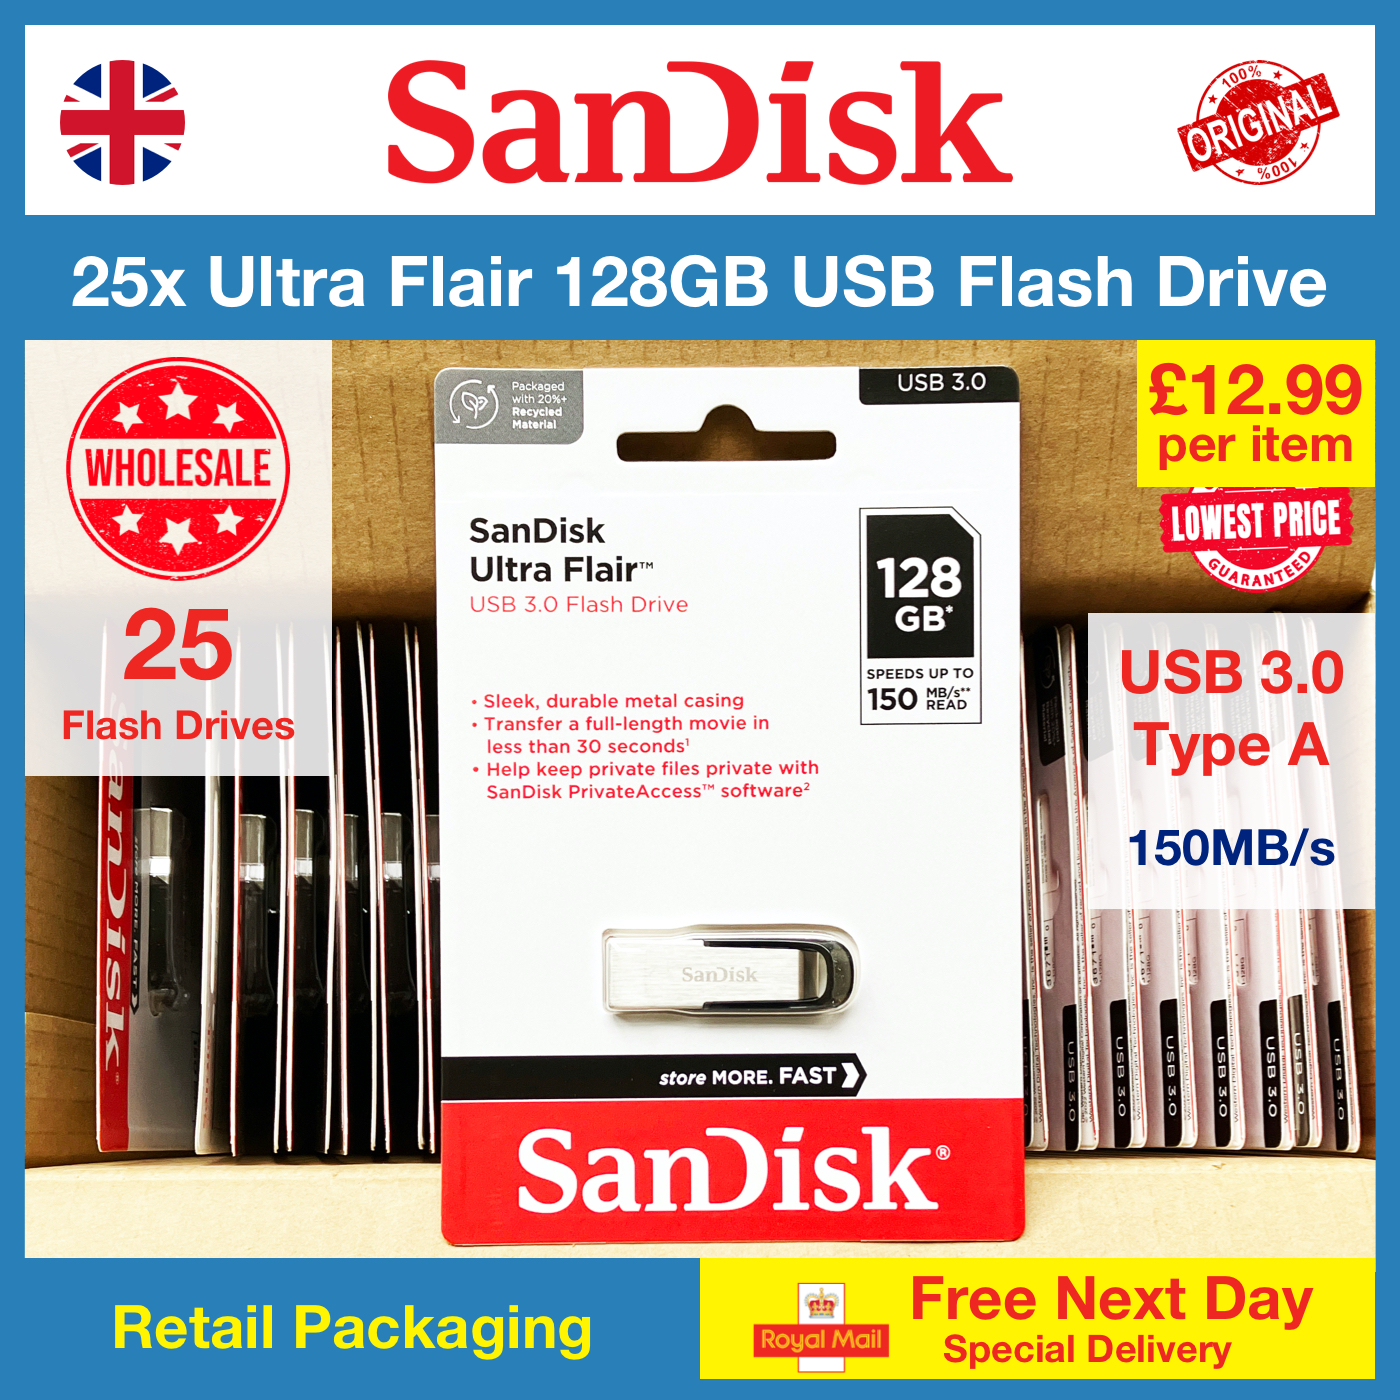 25x SanDisk Ultra Flair 128GB USB Flash Drive Wholesale Shop Moksha